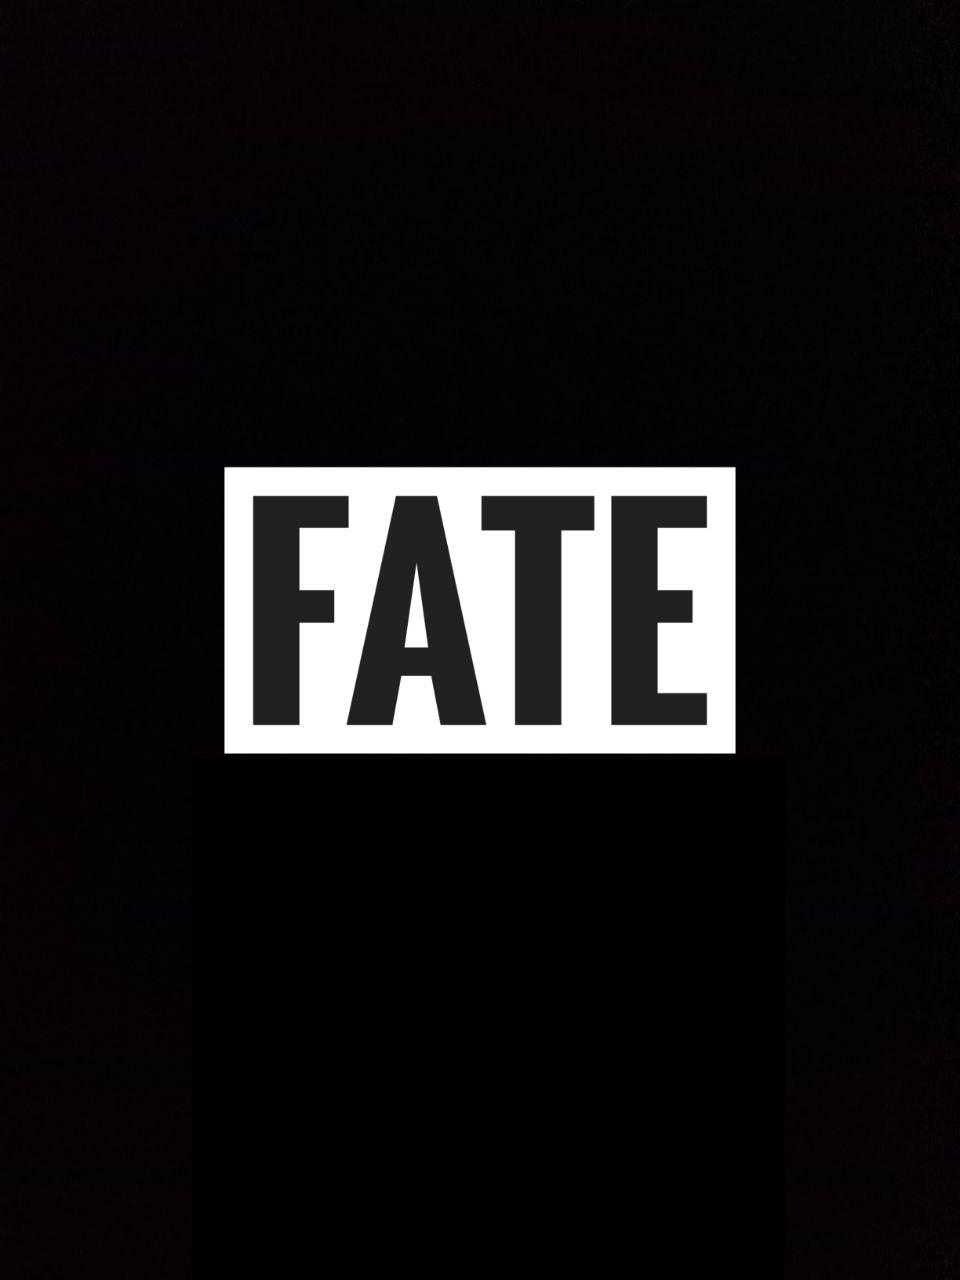 Fate Facts( If you believe in FATE)